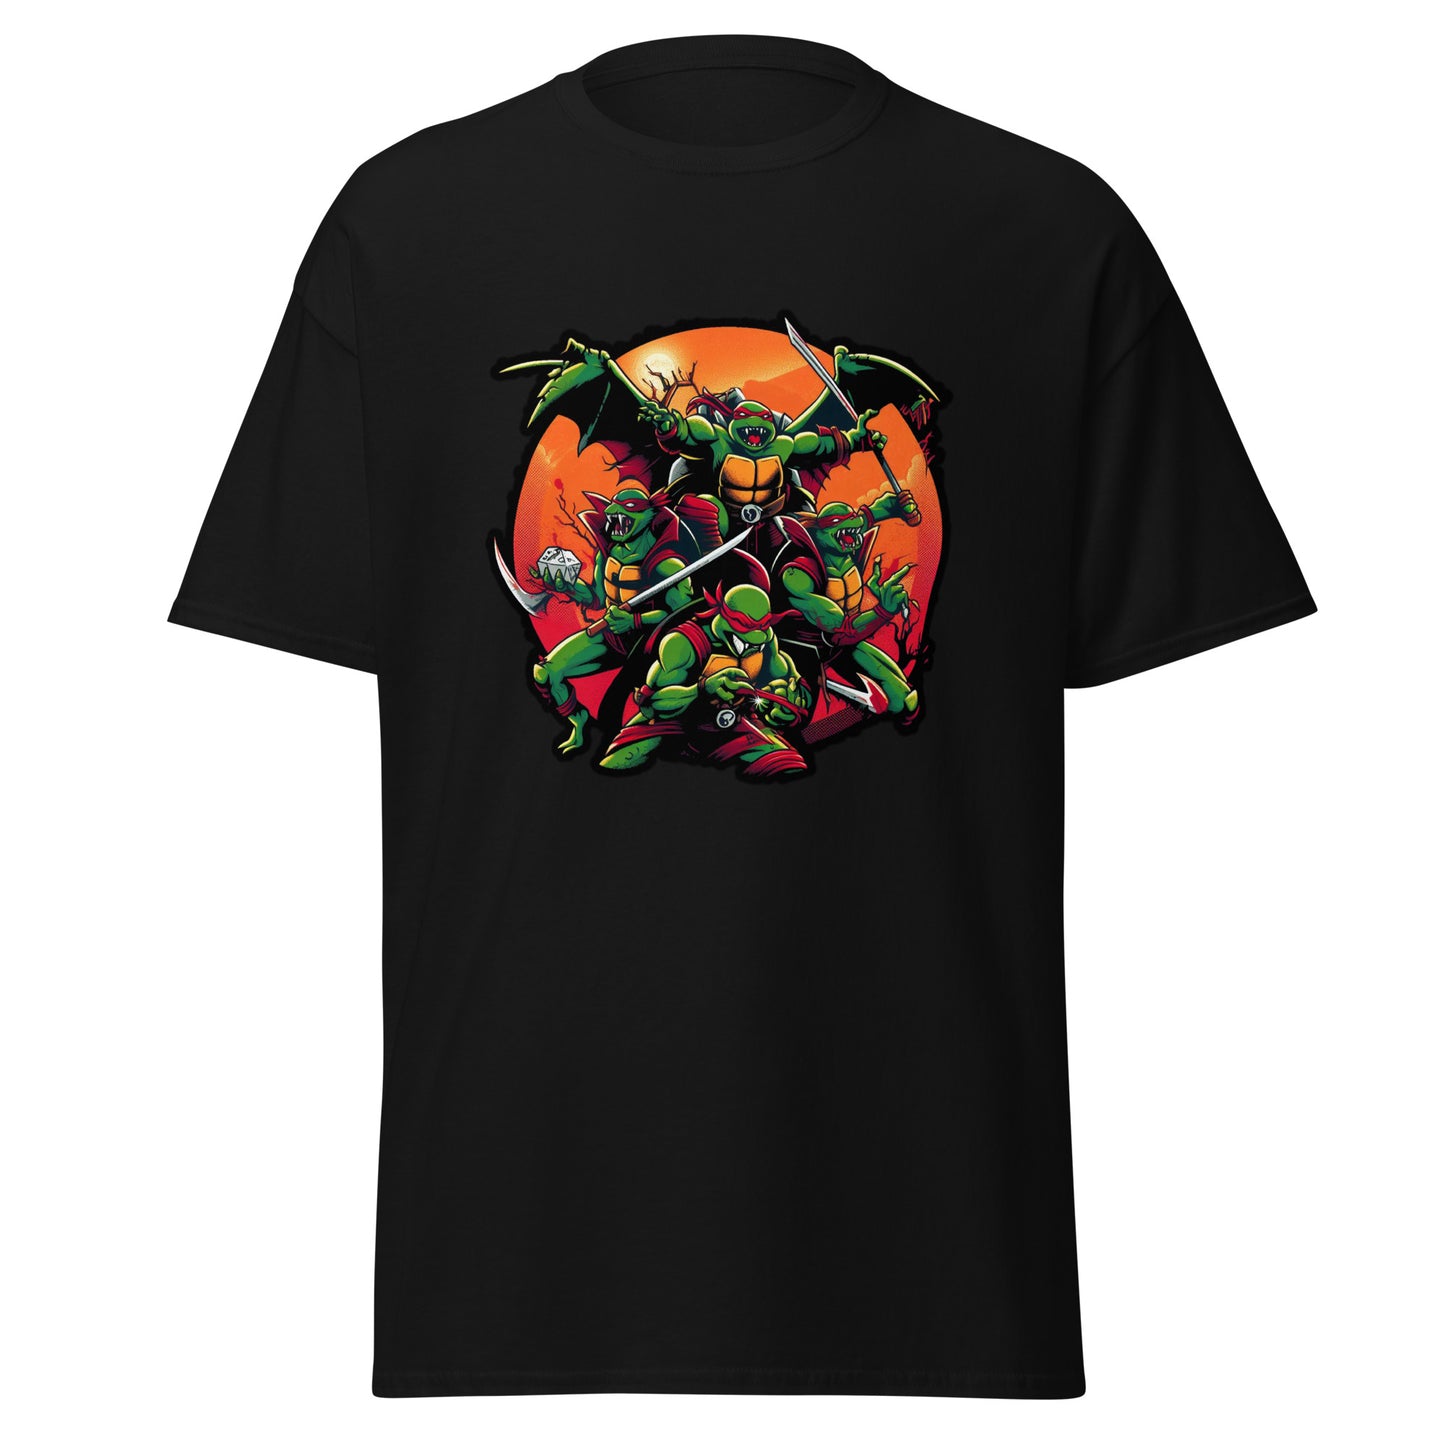 Teenage Mutant Ninja Vampire Turtles T-Shirt - Fangs, Shells, and Heroics